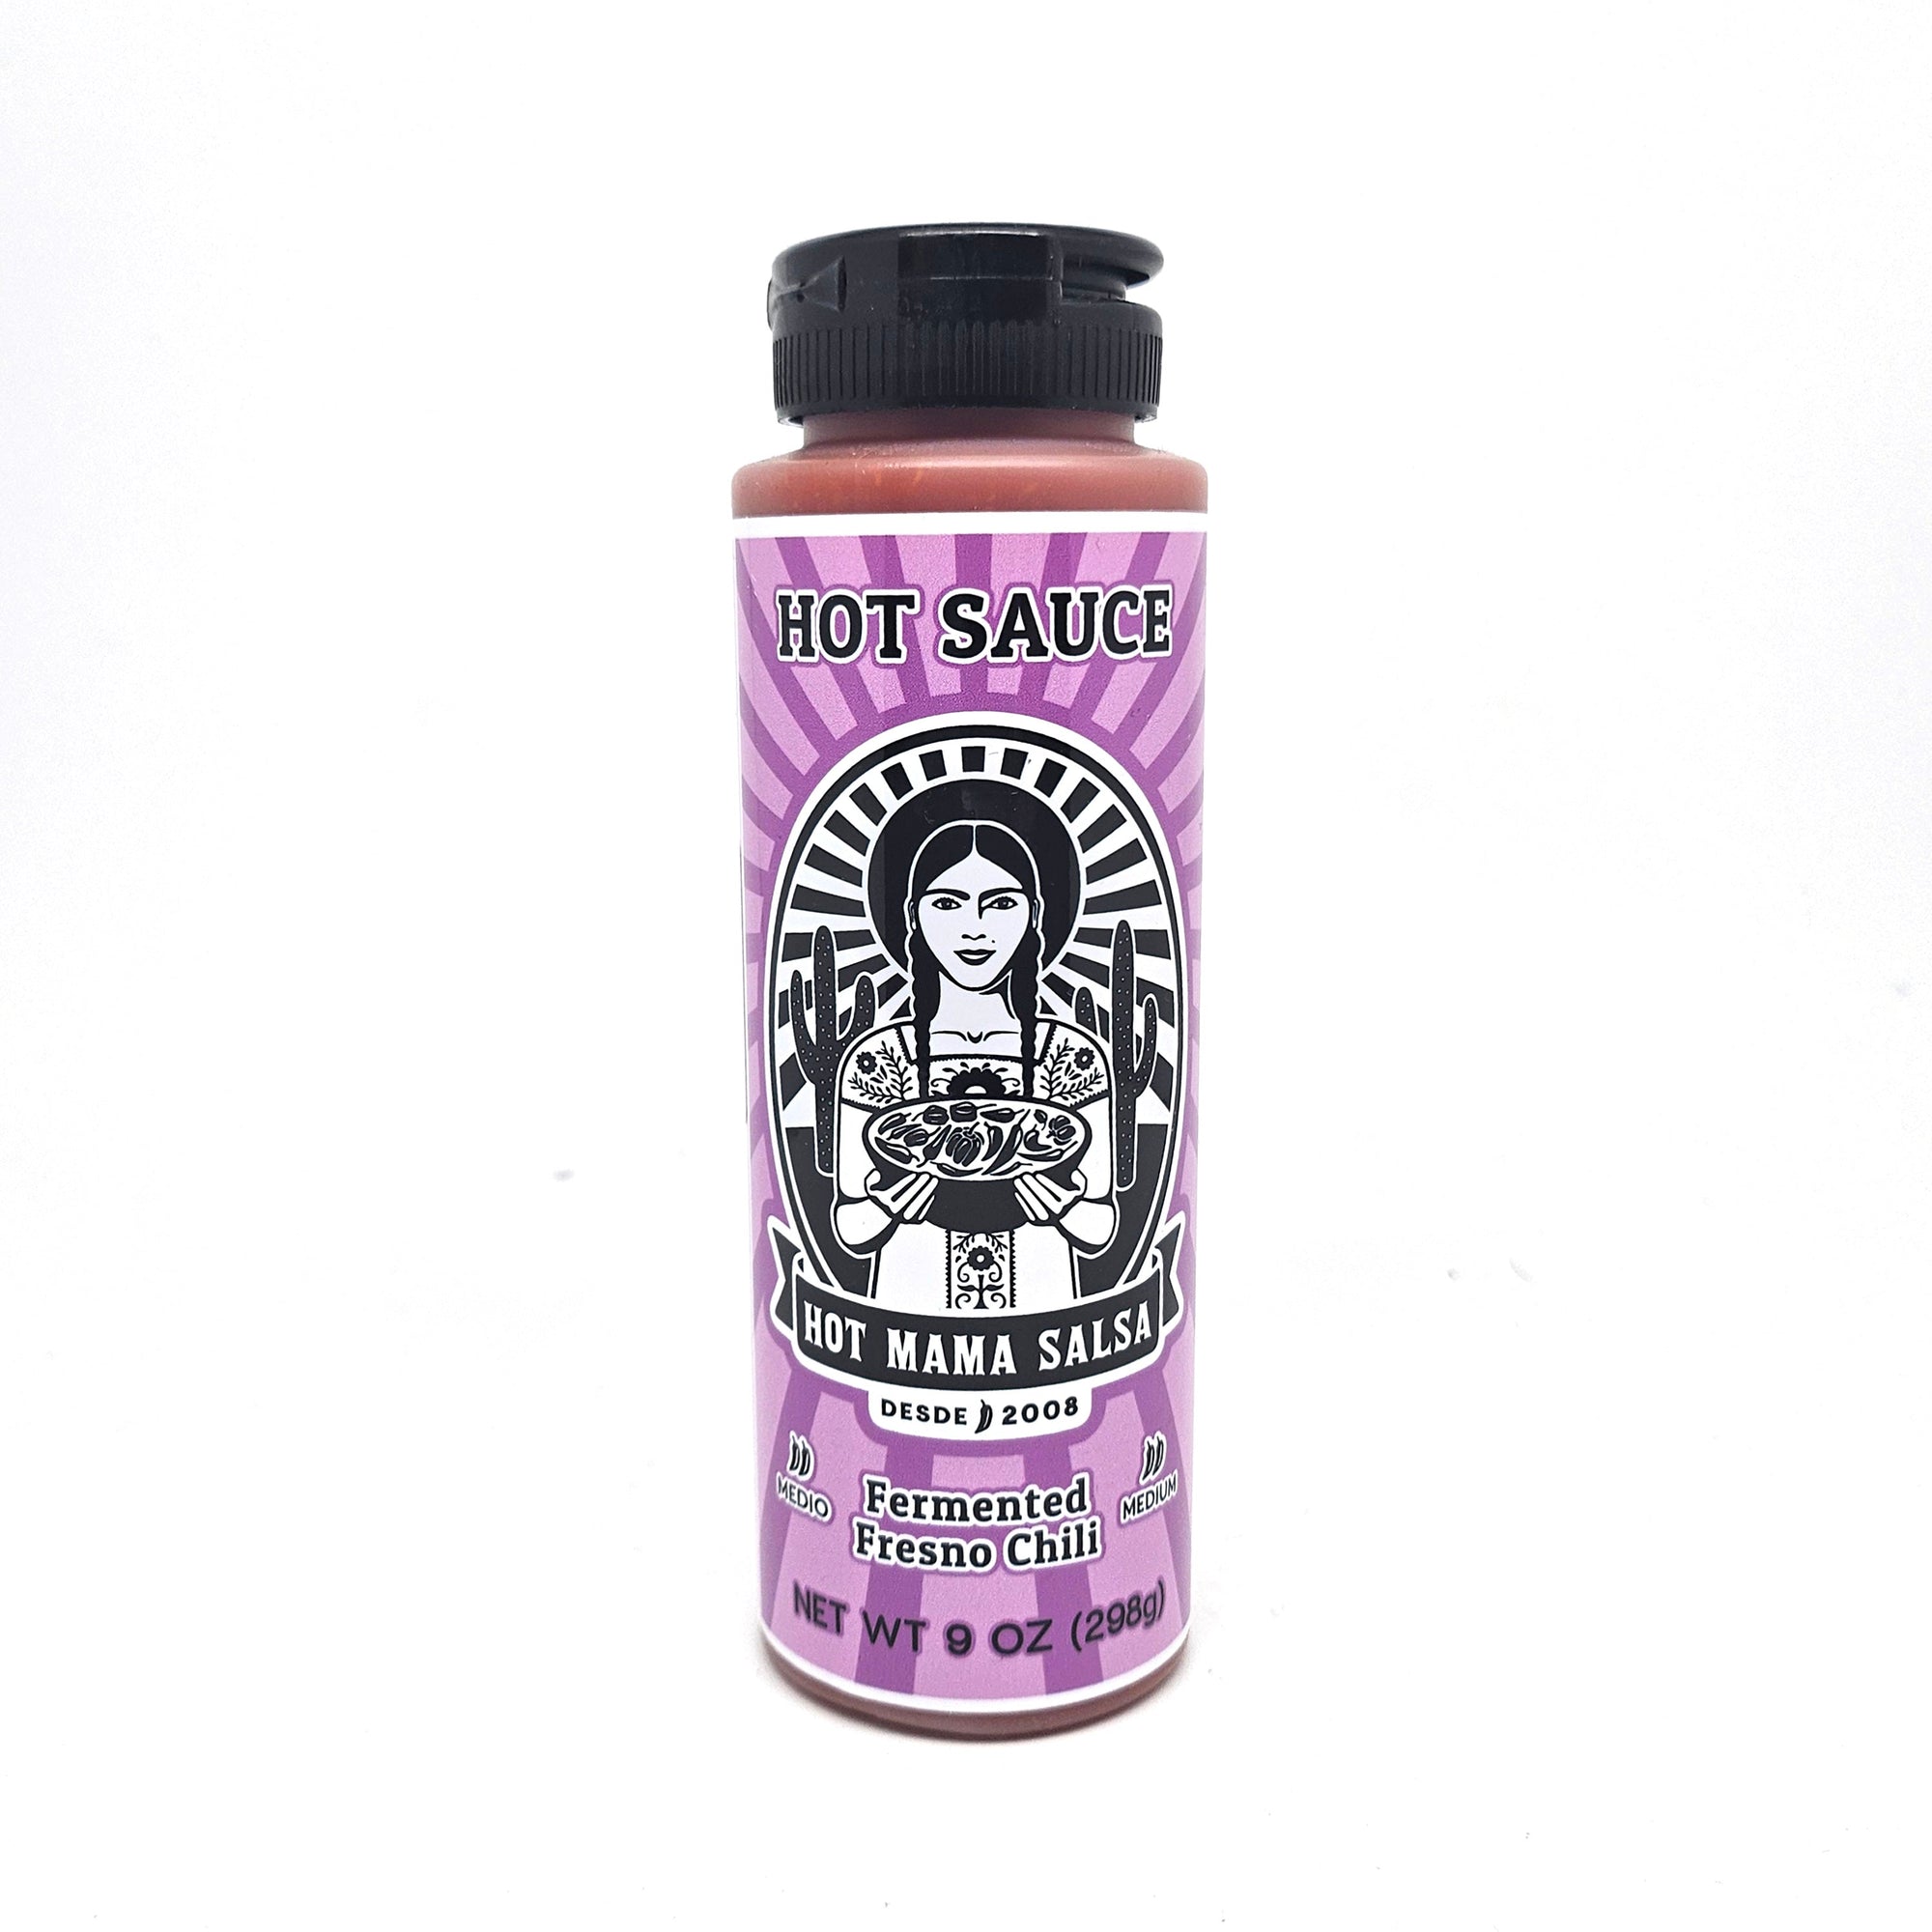 Hot Mama Salsa Fermented Fresno Chili Hot Sauce - Edibles - Hello From Portland